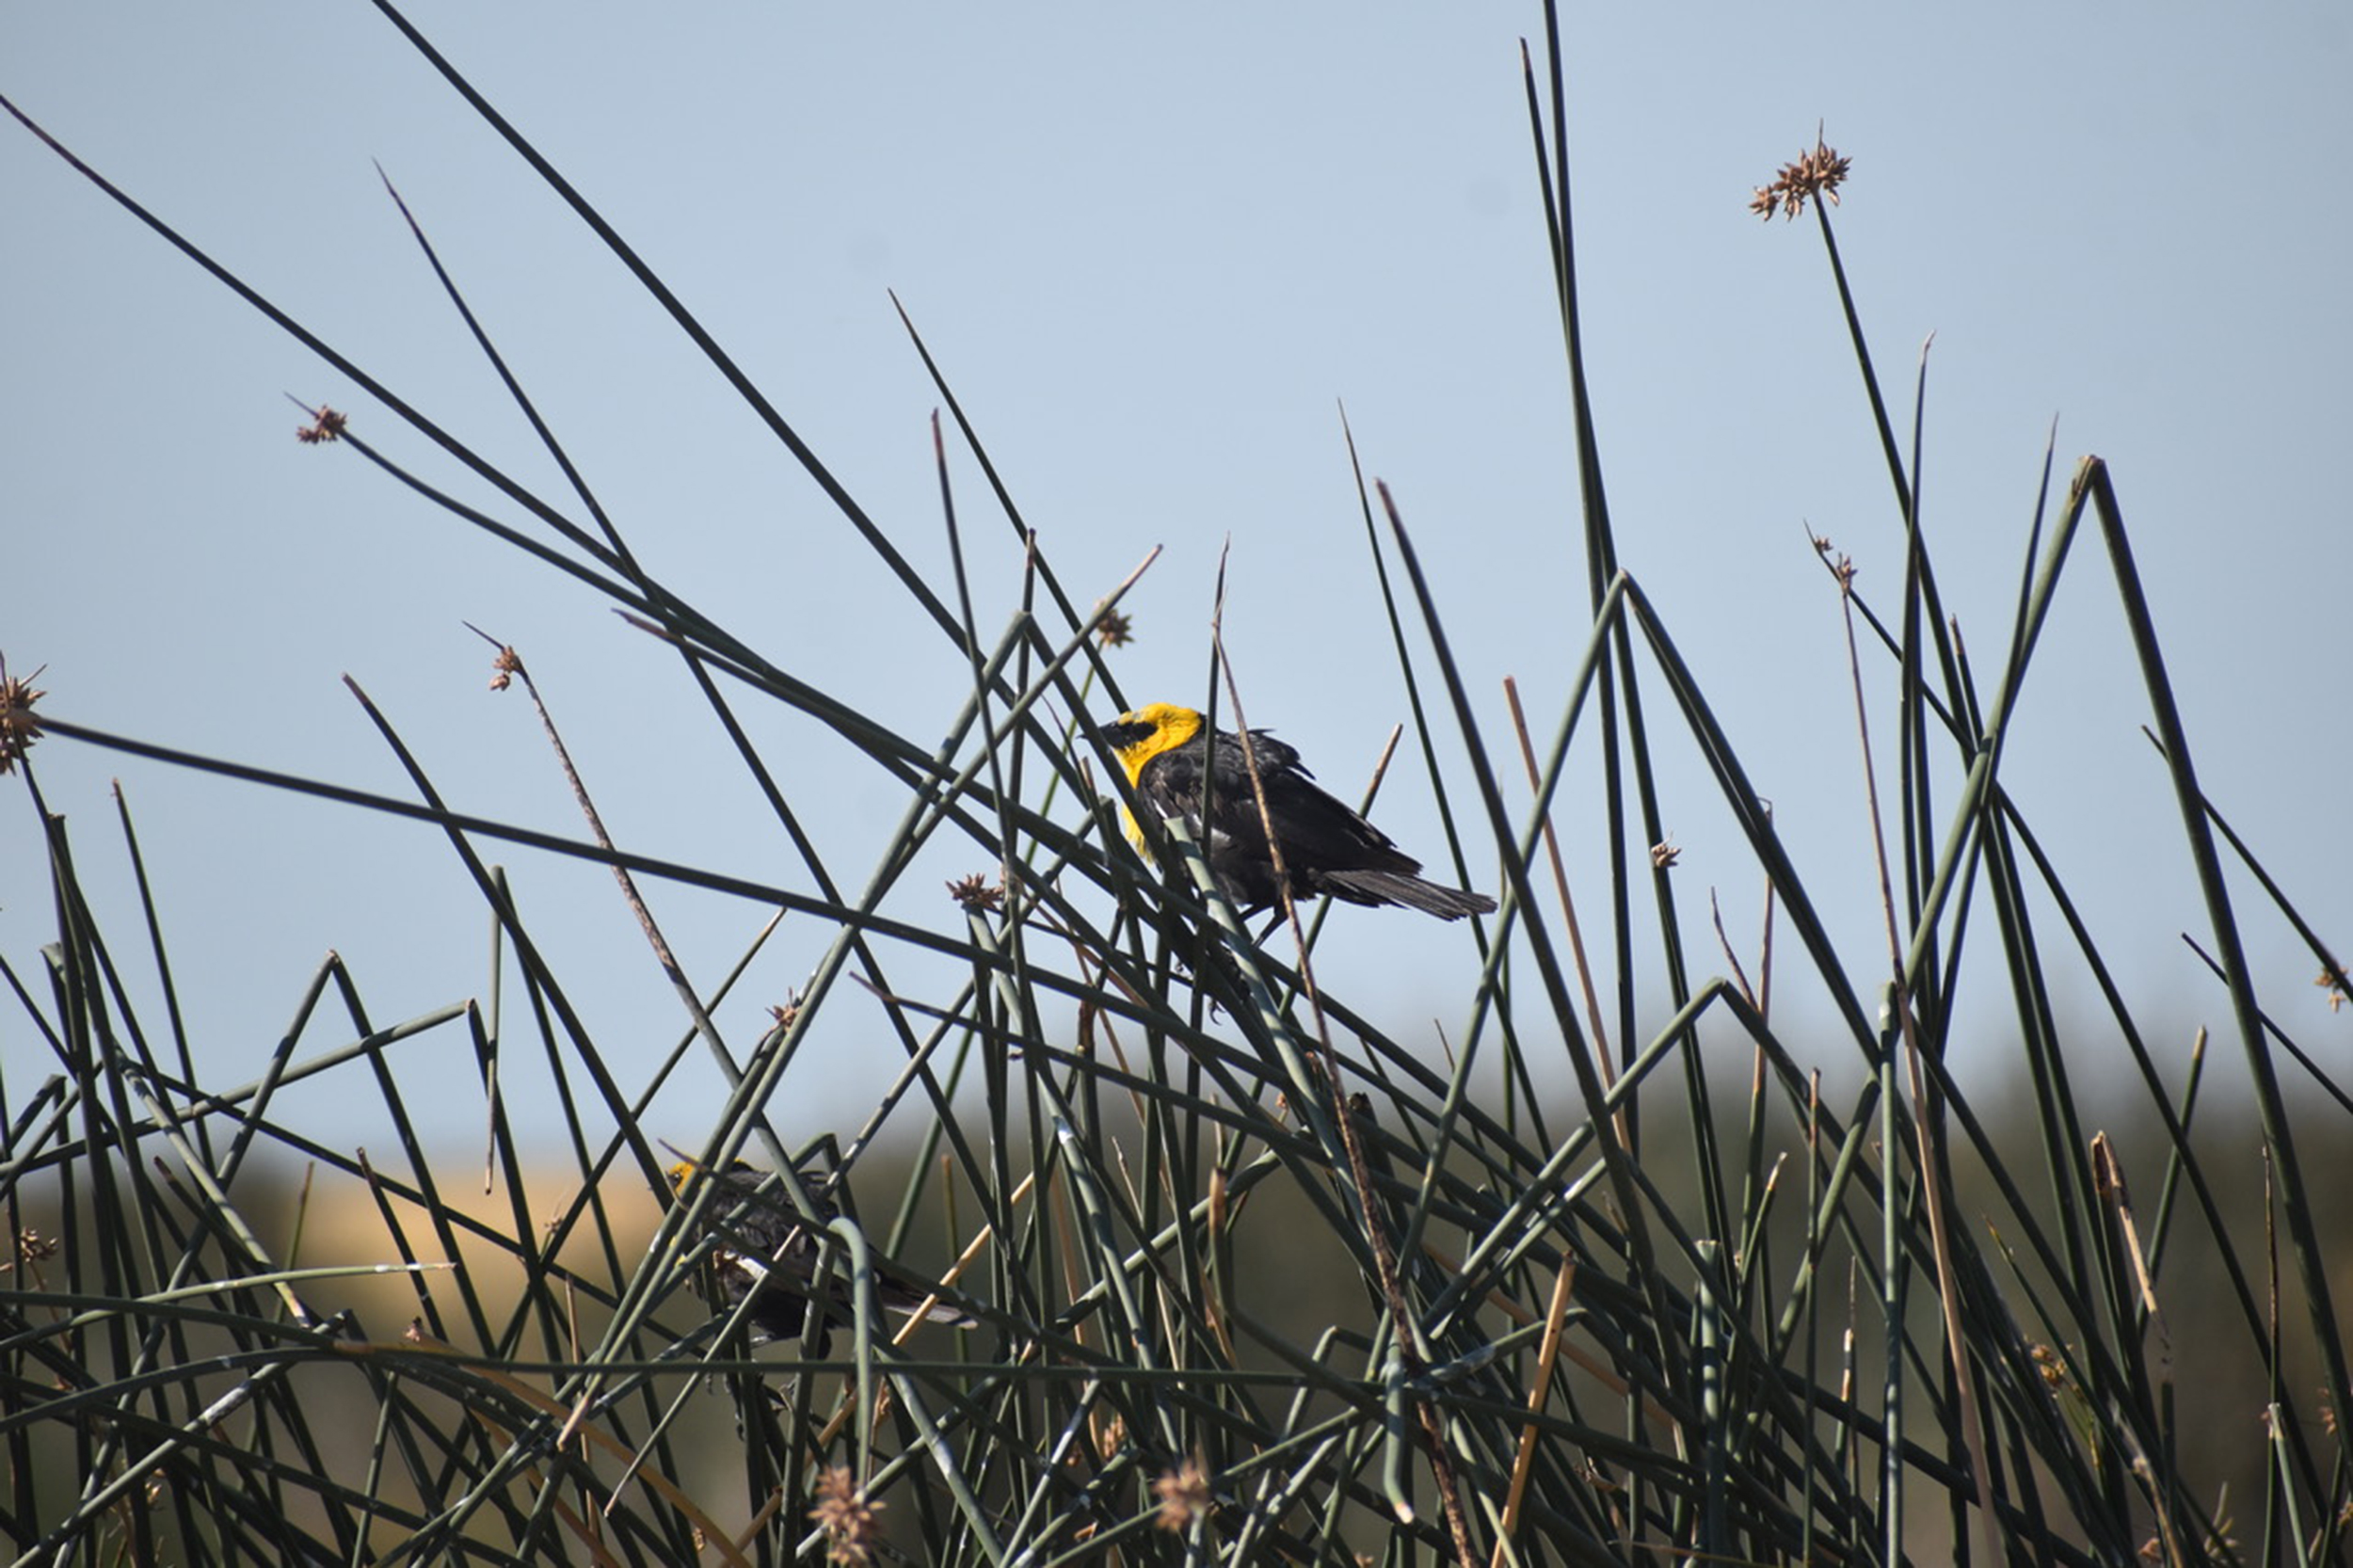 Yellow-headed blackbird perched